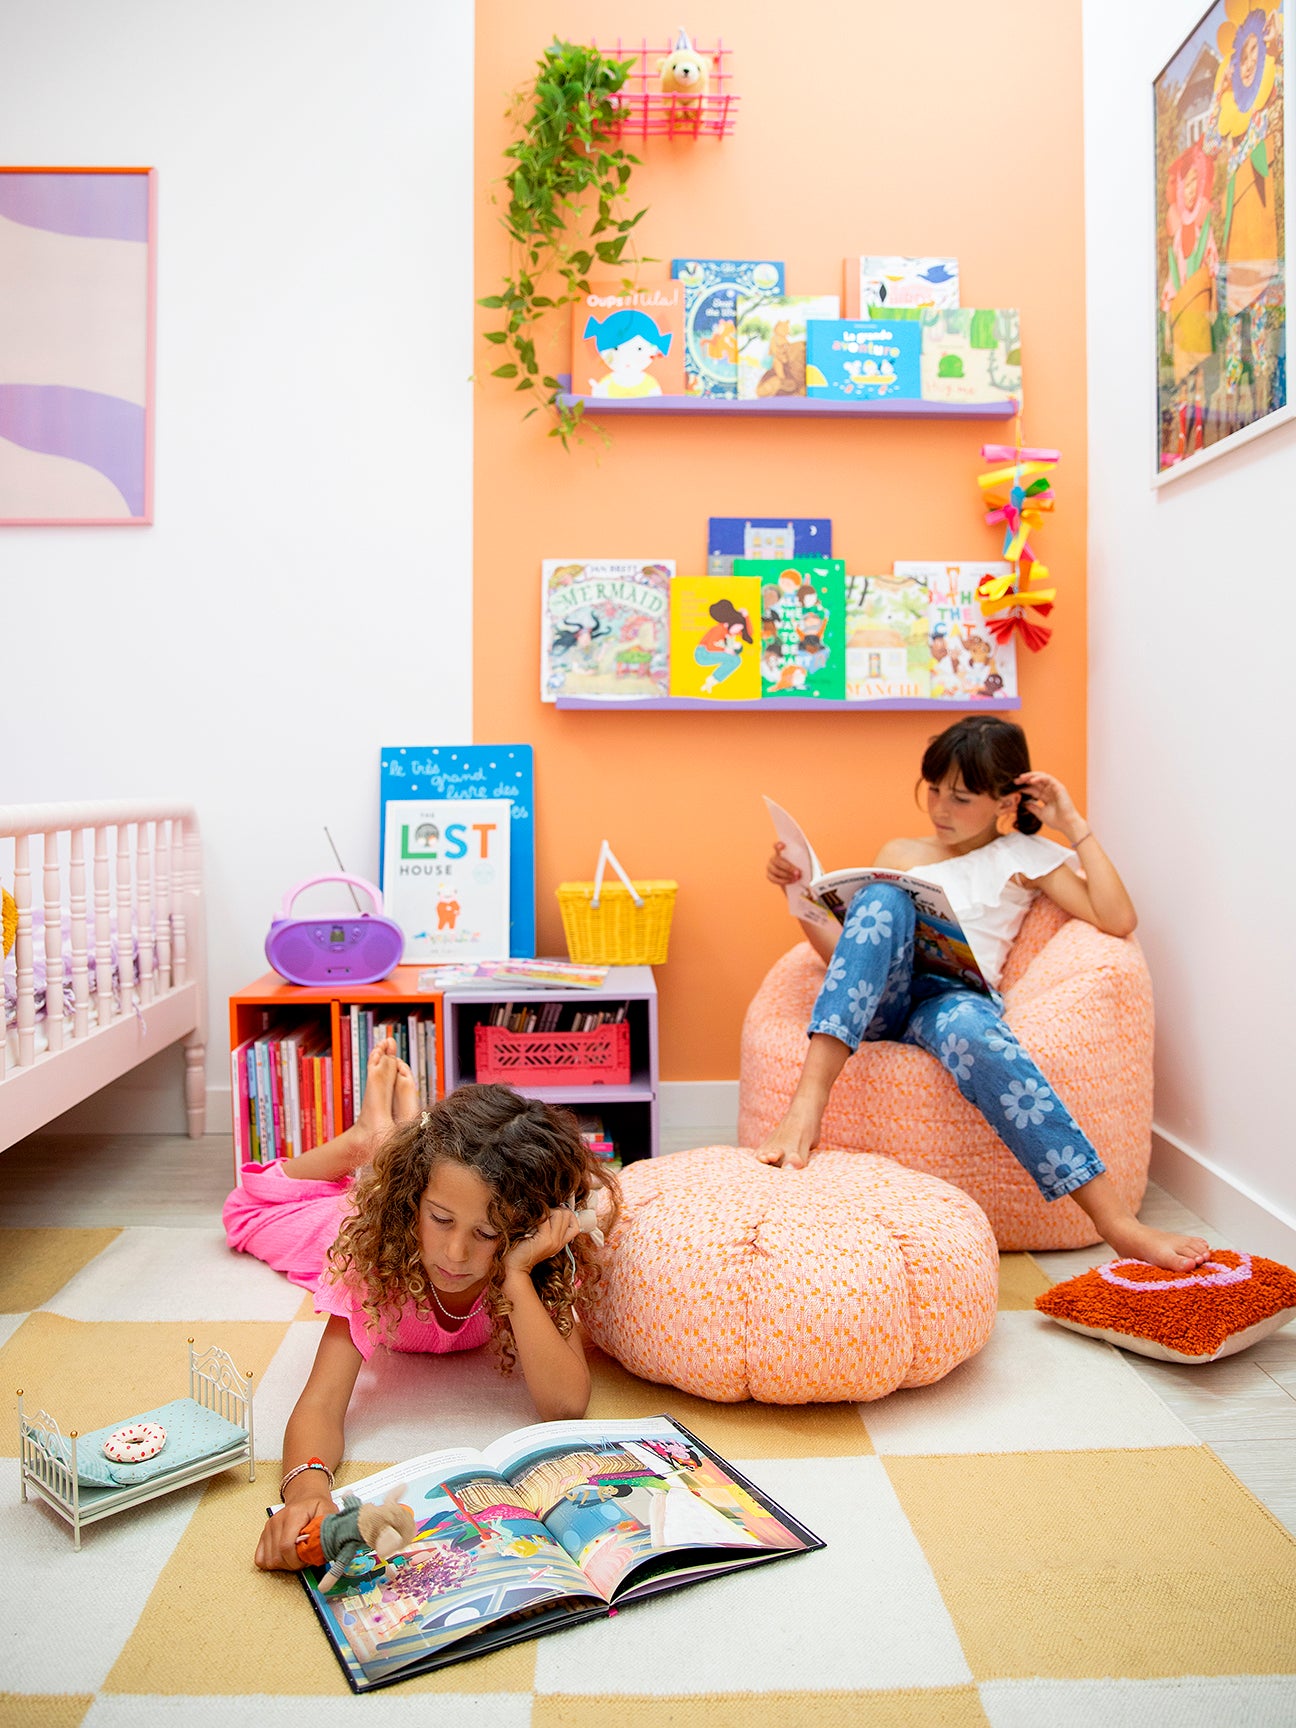 kidsâ reading nook with salmon-colored wall stripe and lavender shelves